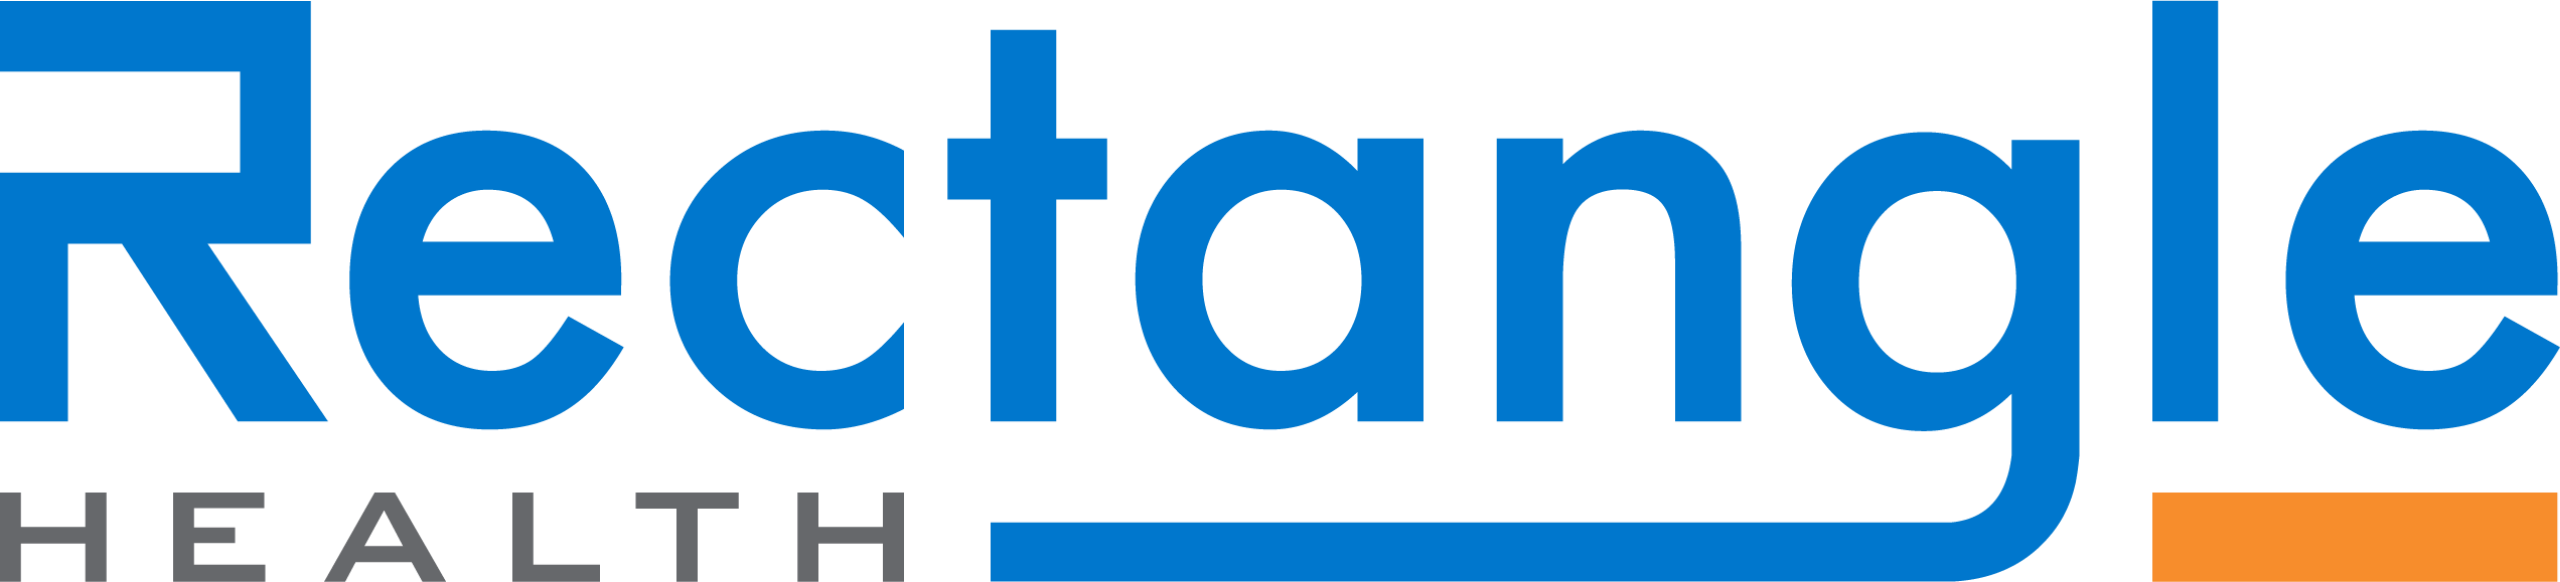 Rectangle Health Logo